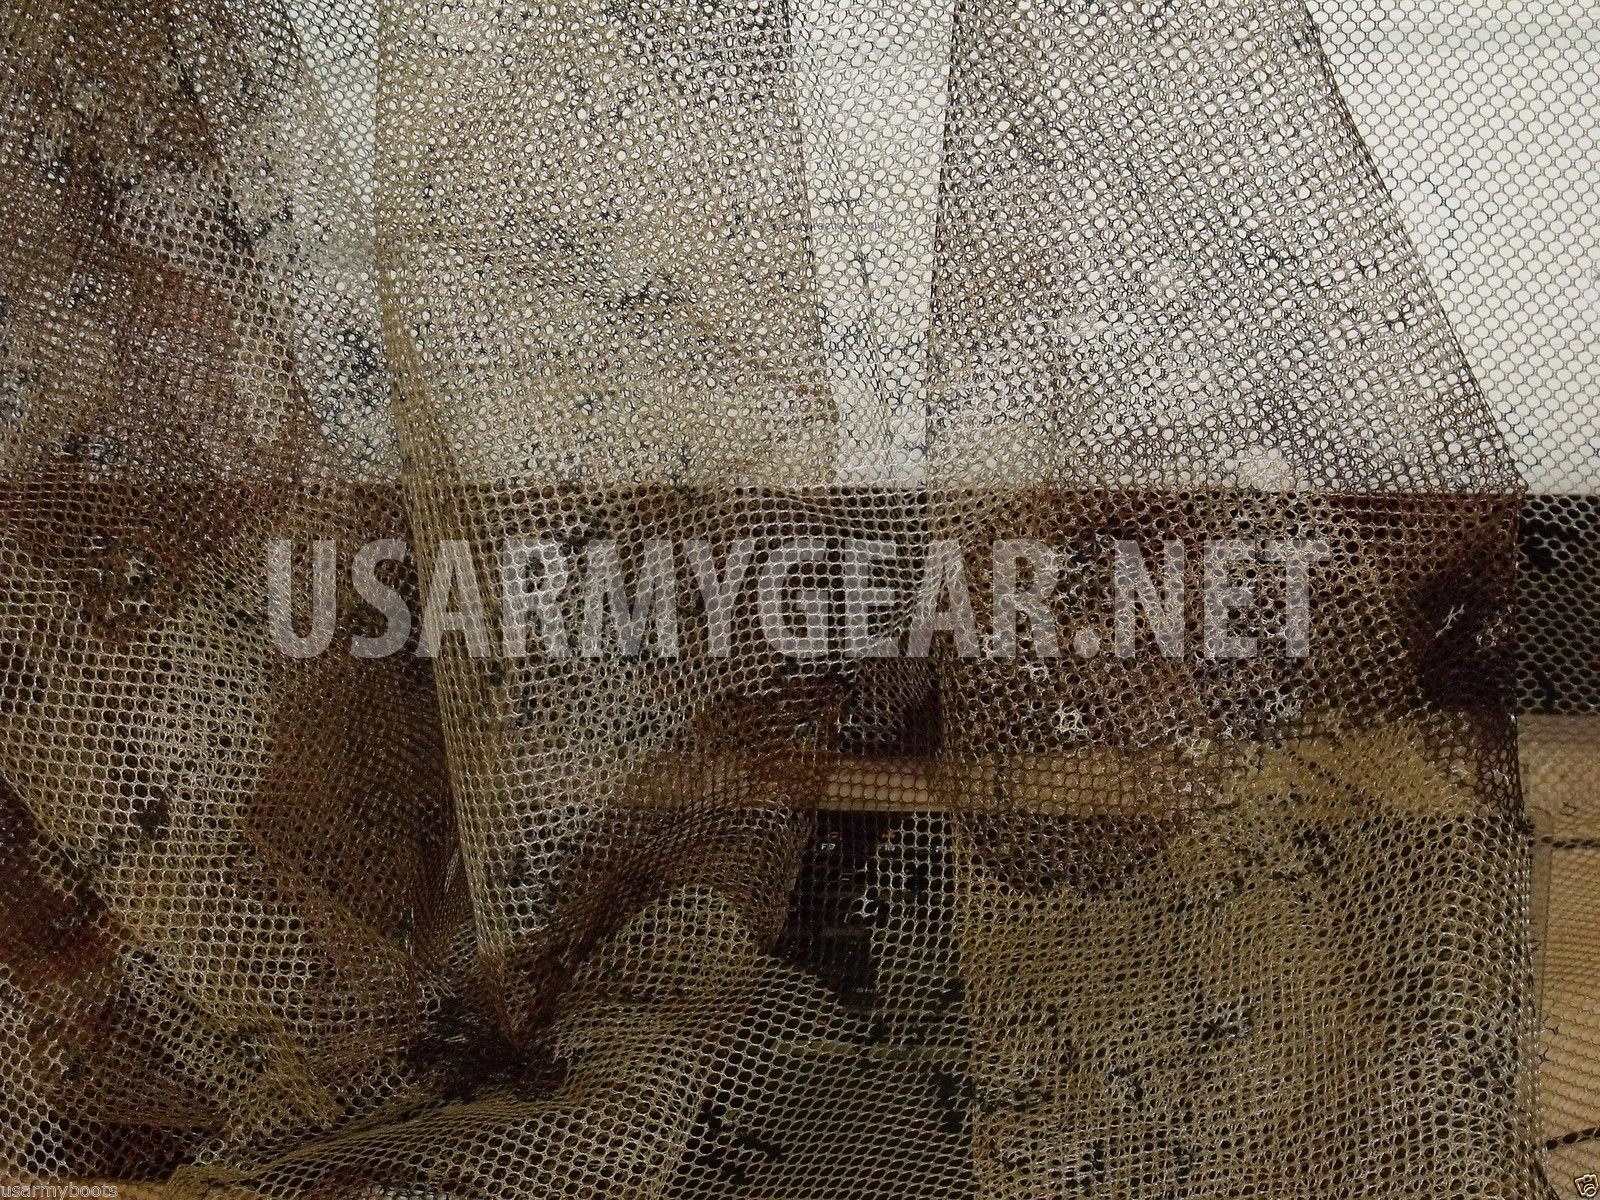 NEW Desert Camo Netting 5 x 8 US Army Gear